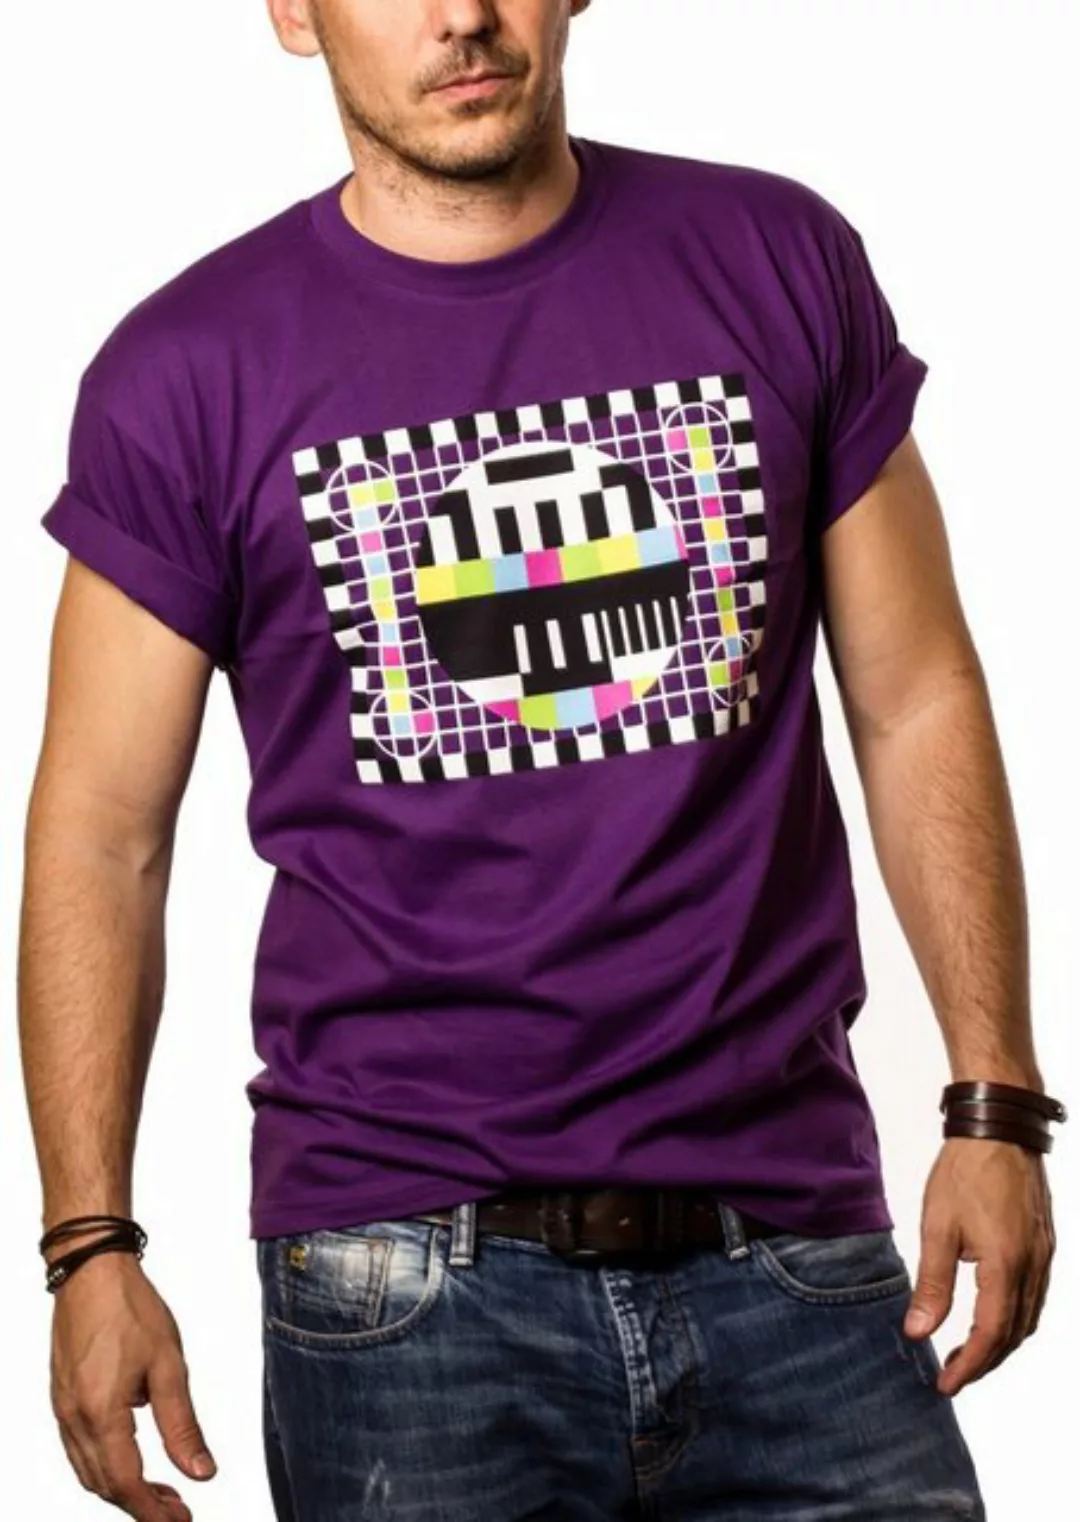 MAKAYA Print-Shirt Testbild Herren Retro Motiv Nerd Gamer Geek Gaming Jungs günstig online kaufen